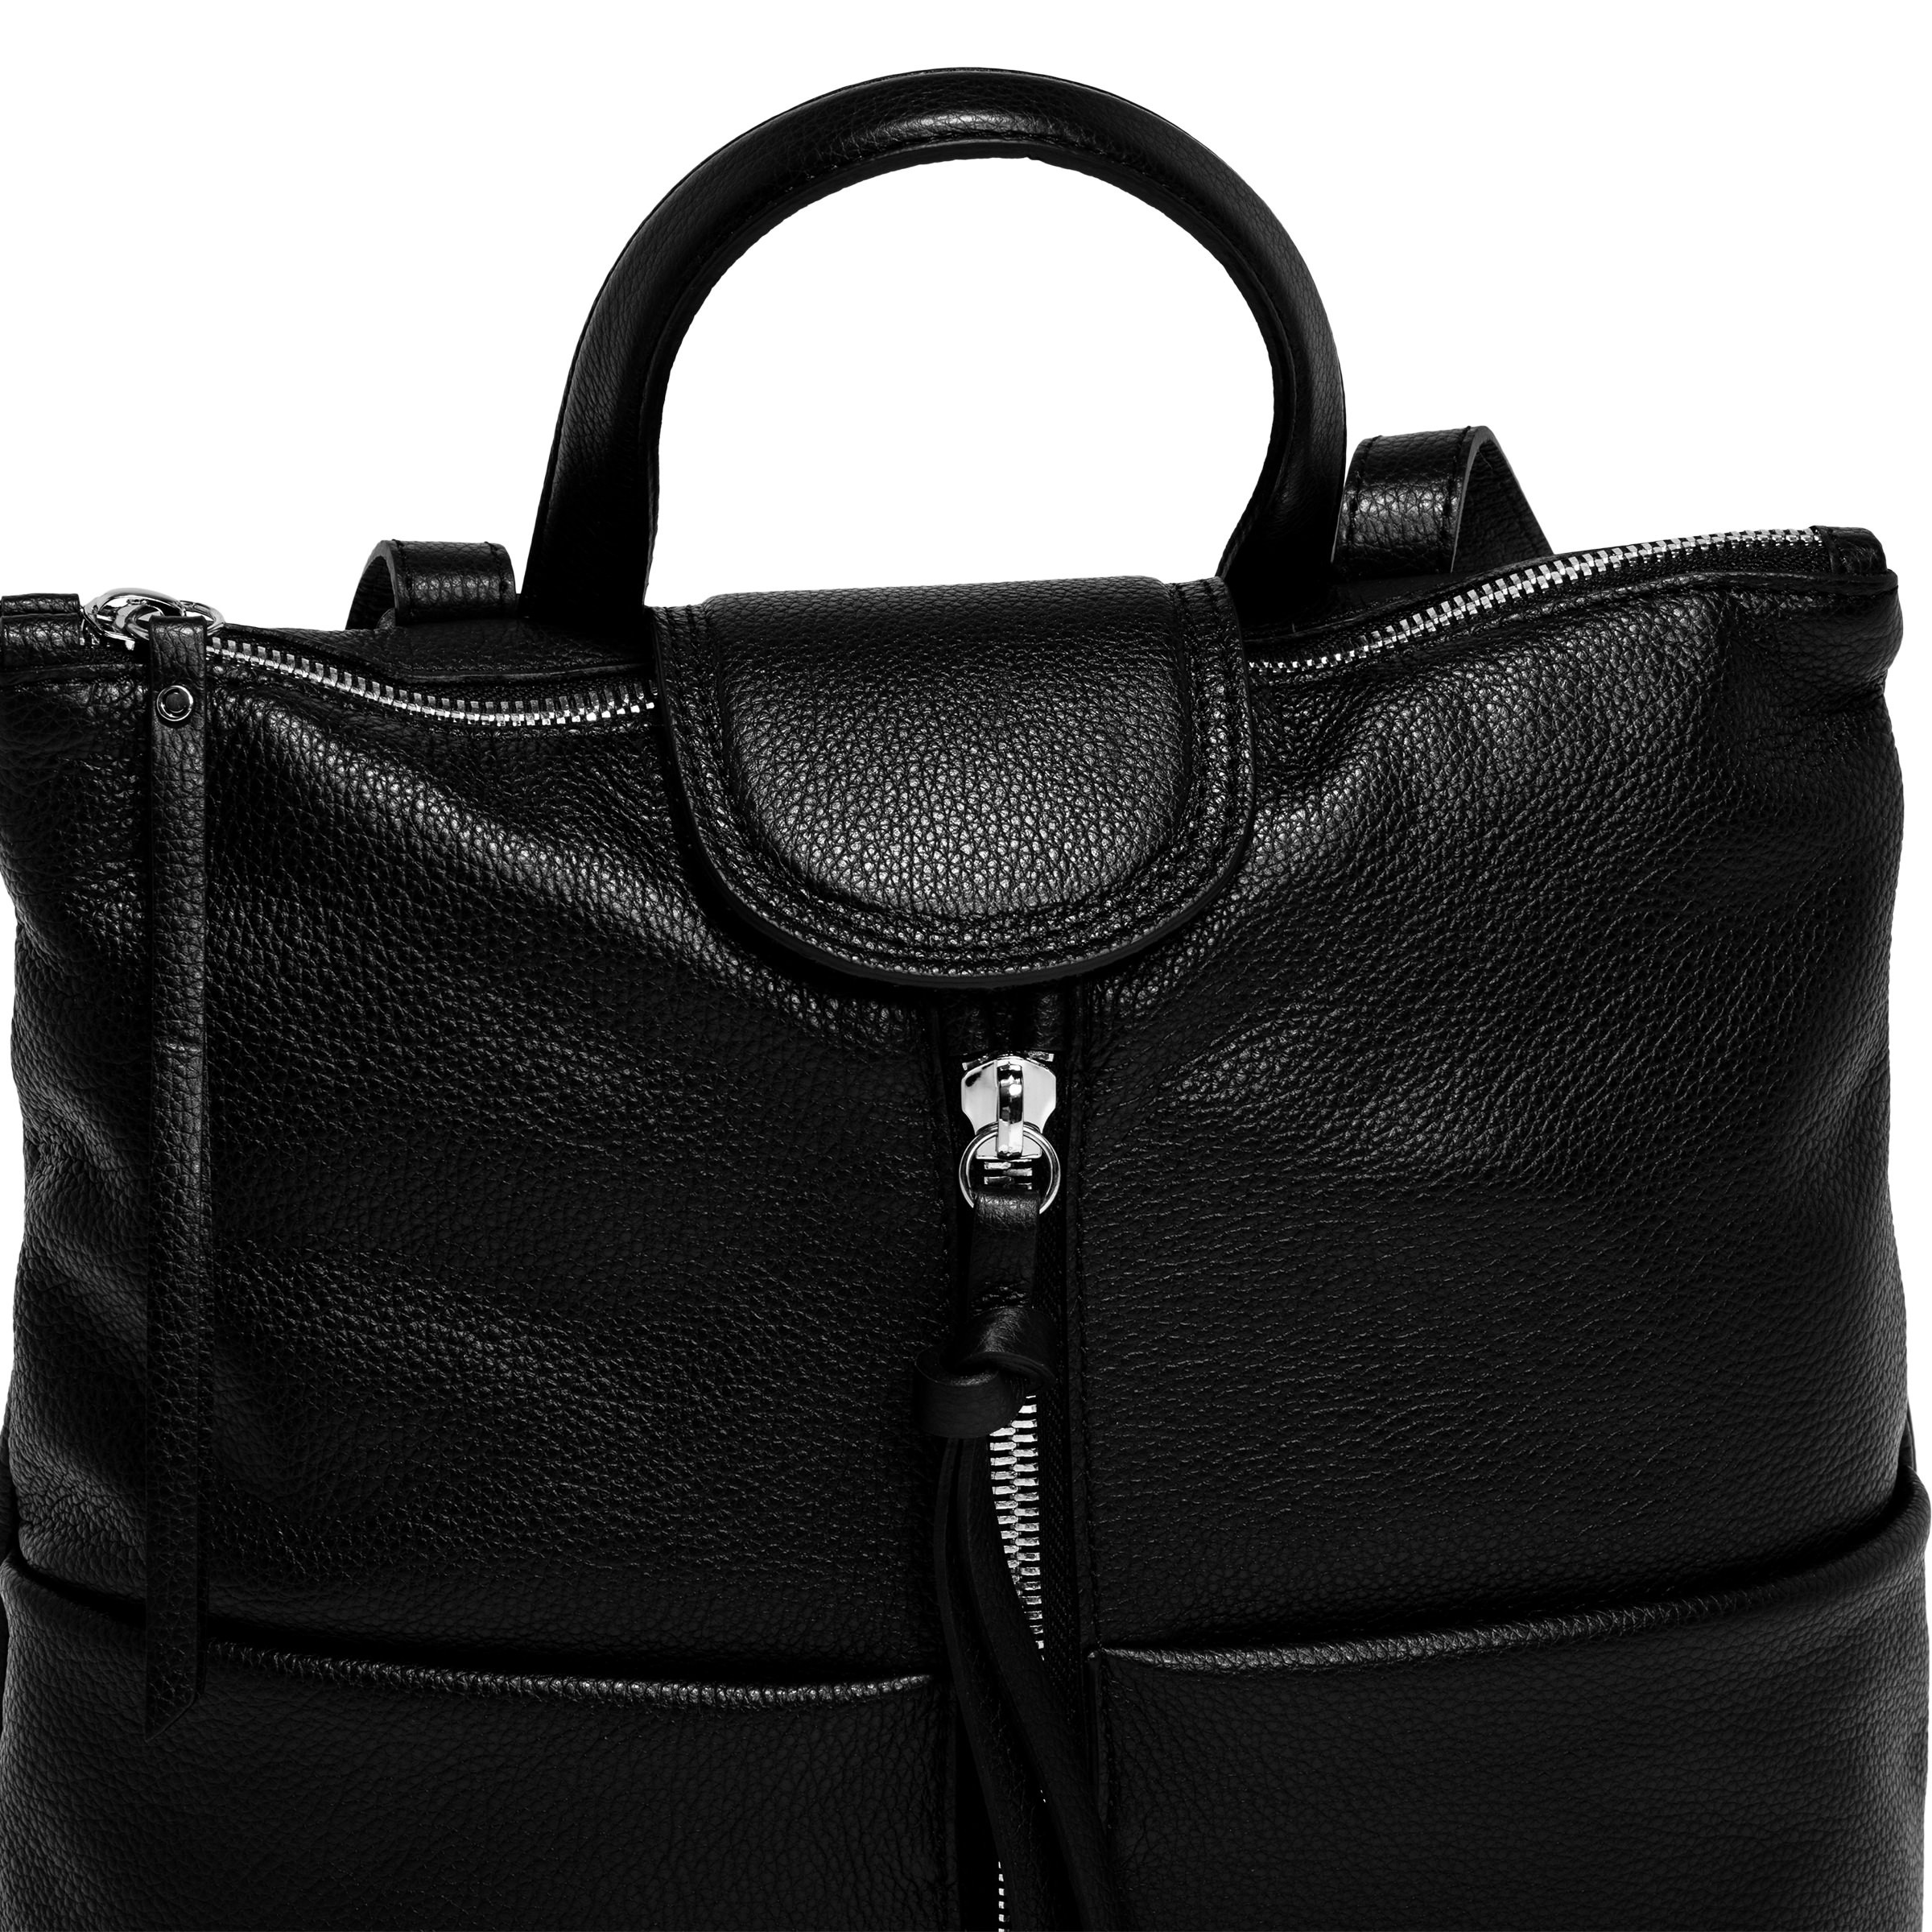 Gianni Chiarini - Jade leather backpack, Black, large image number 3